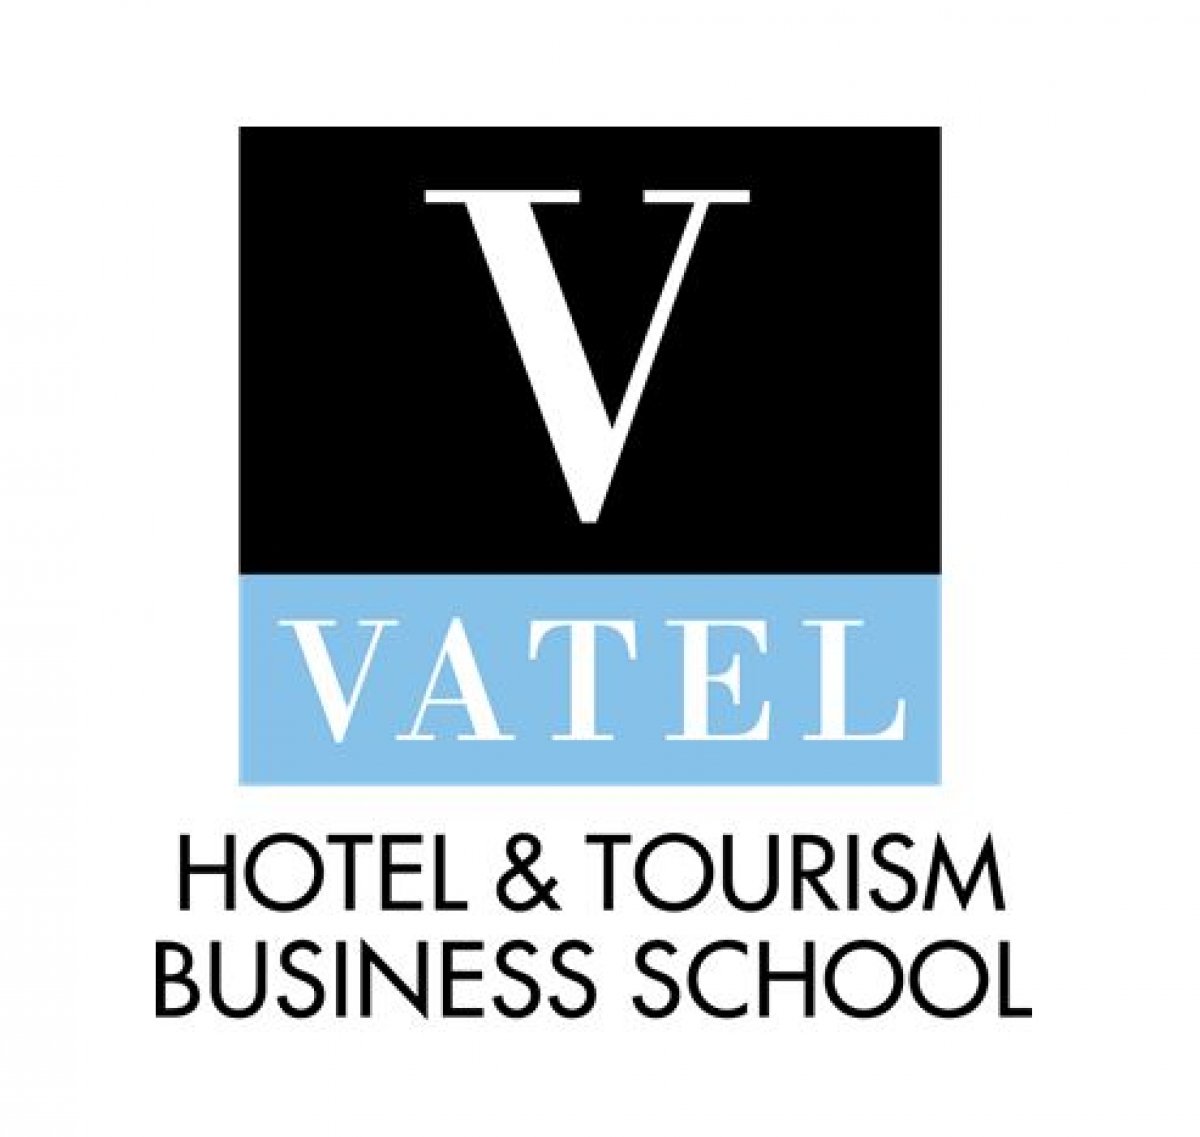 VATEL HOTEL & TOURISM BUSINESS SCHOOL #74